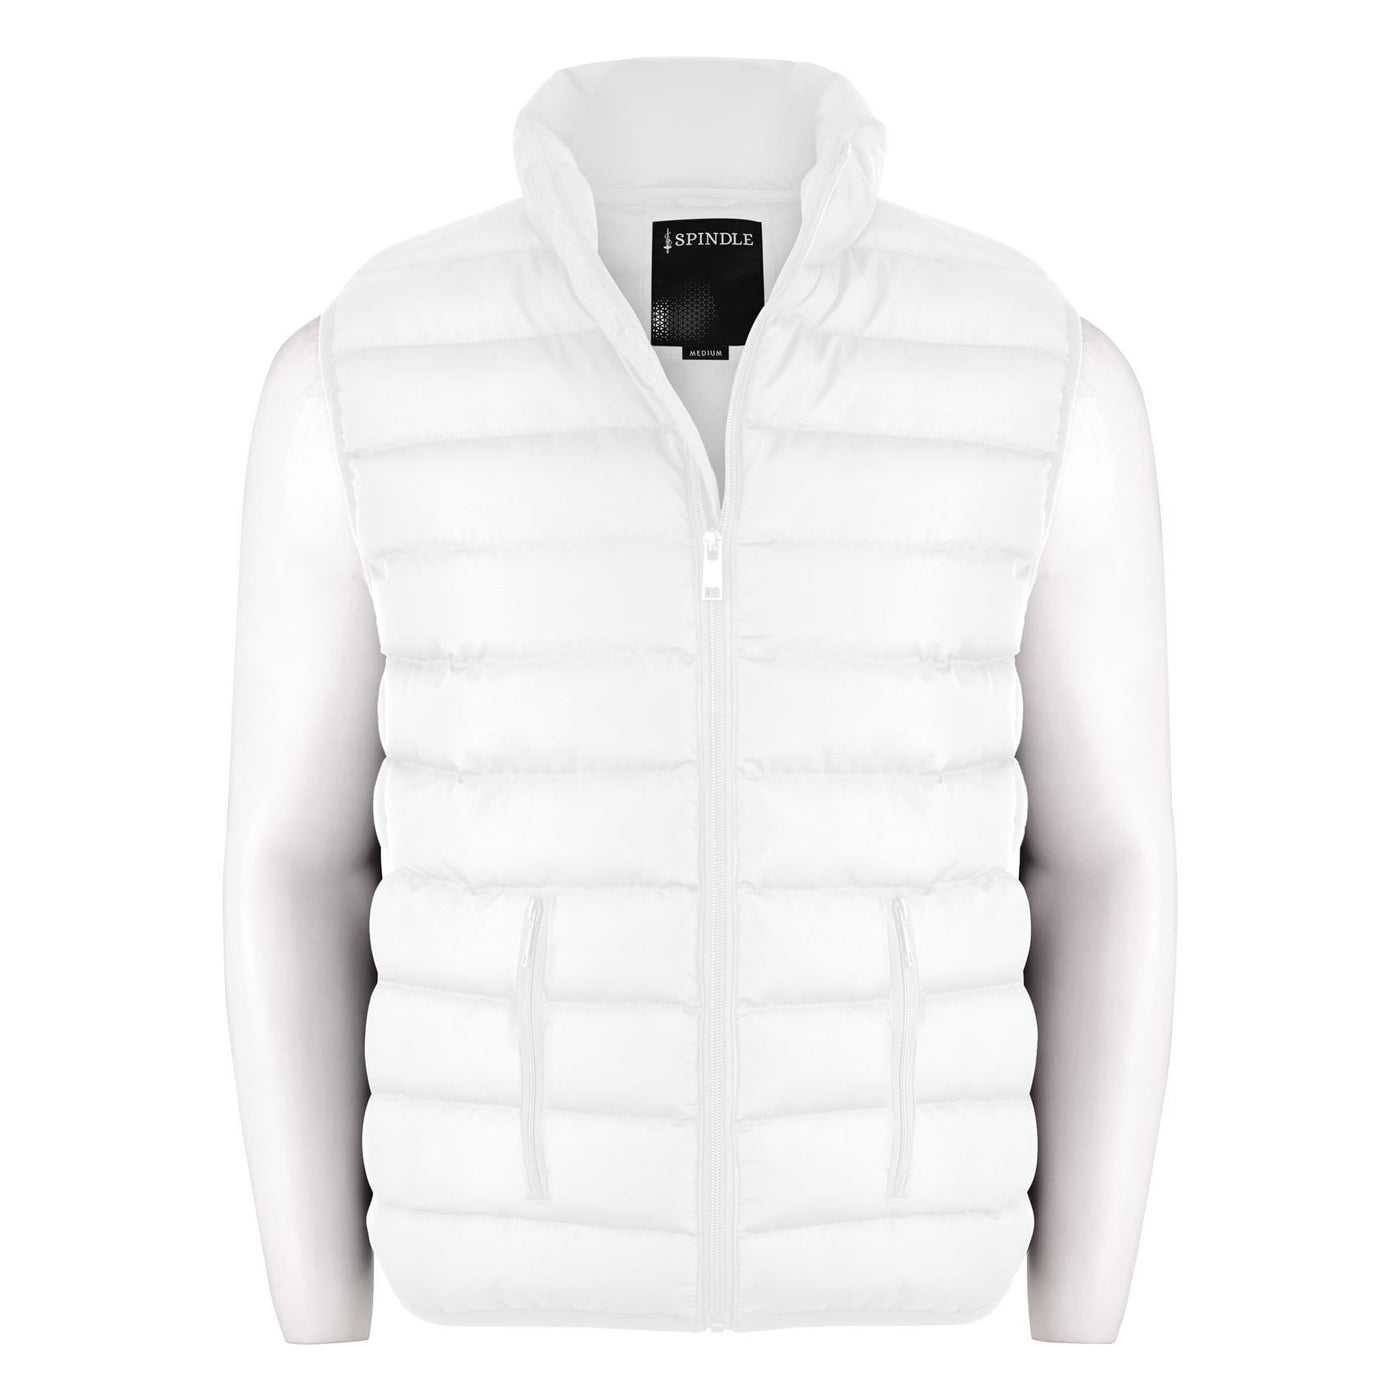 Mens Plain Black Padded Gilet Body Warmer Sleeveless Vest Jacket Zip Pockets without hood Bodywarmer Gillet Sleeveless